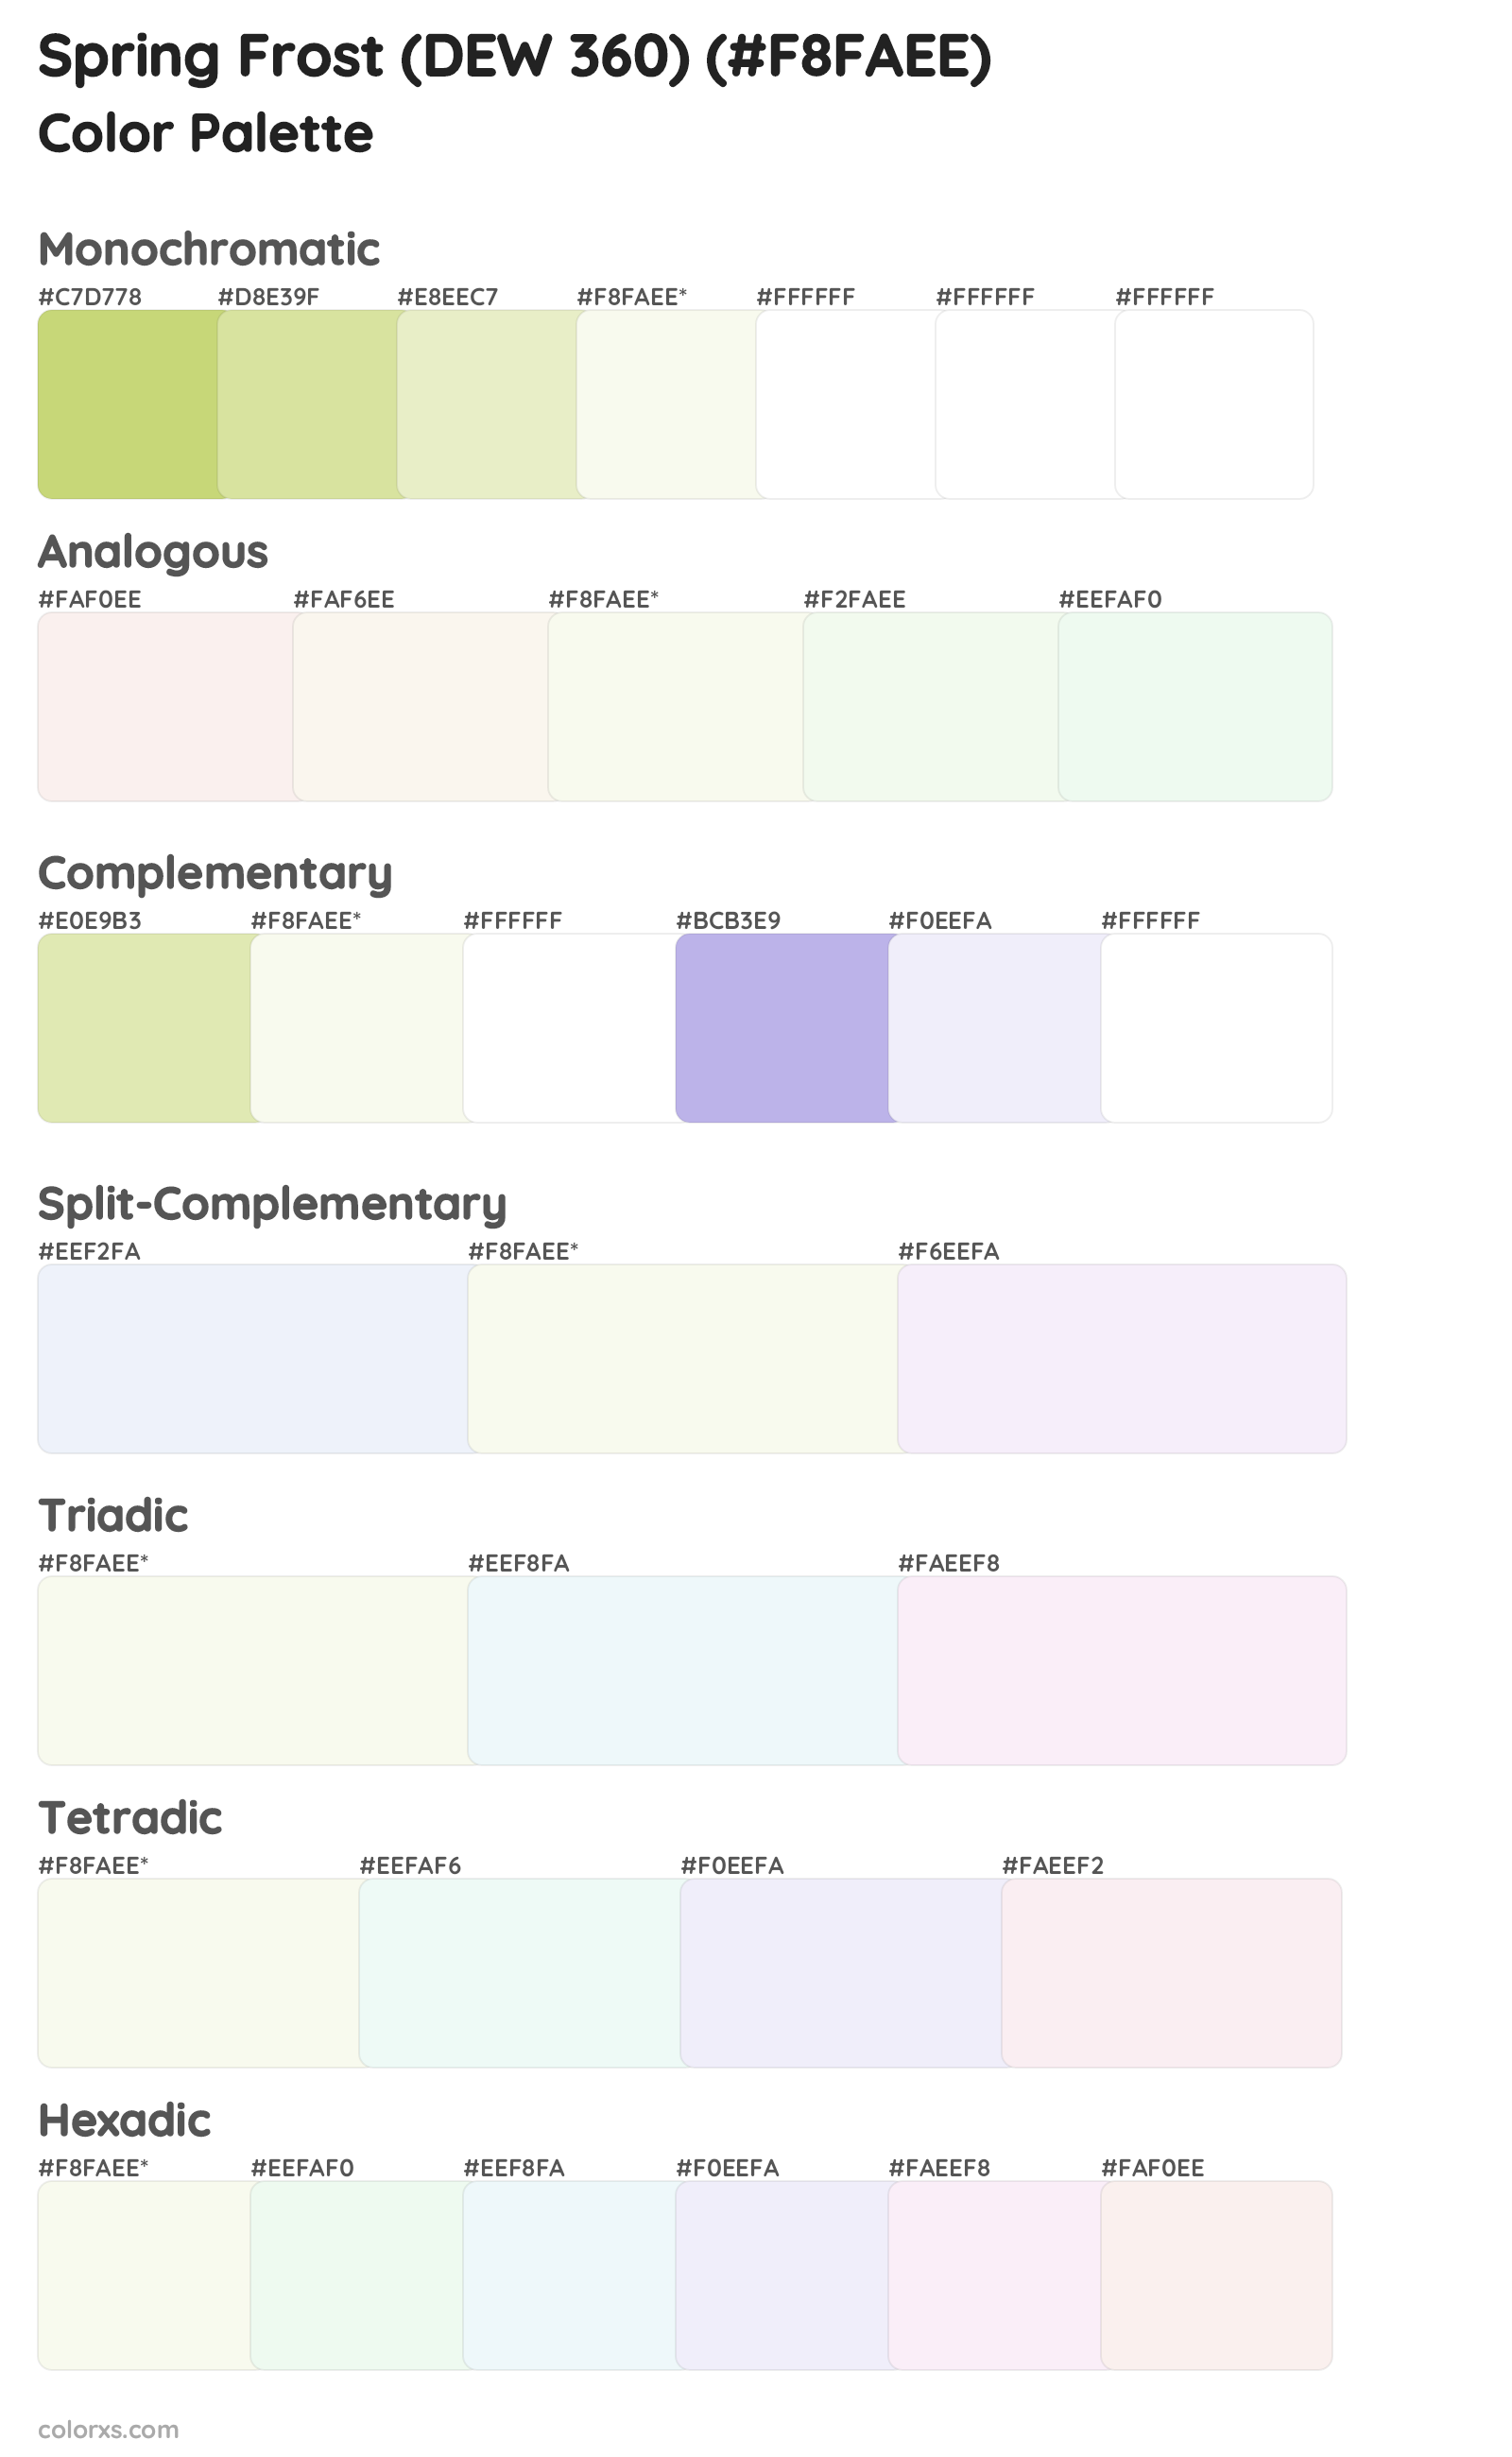 Spring Frost (DEW 360) Color Scheme Palettes